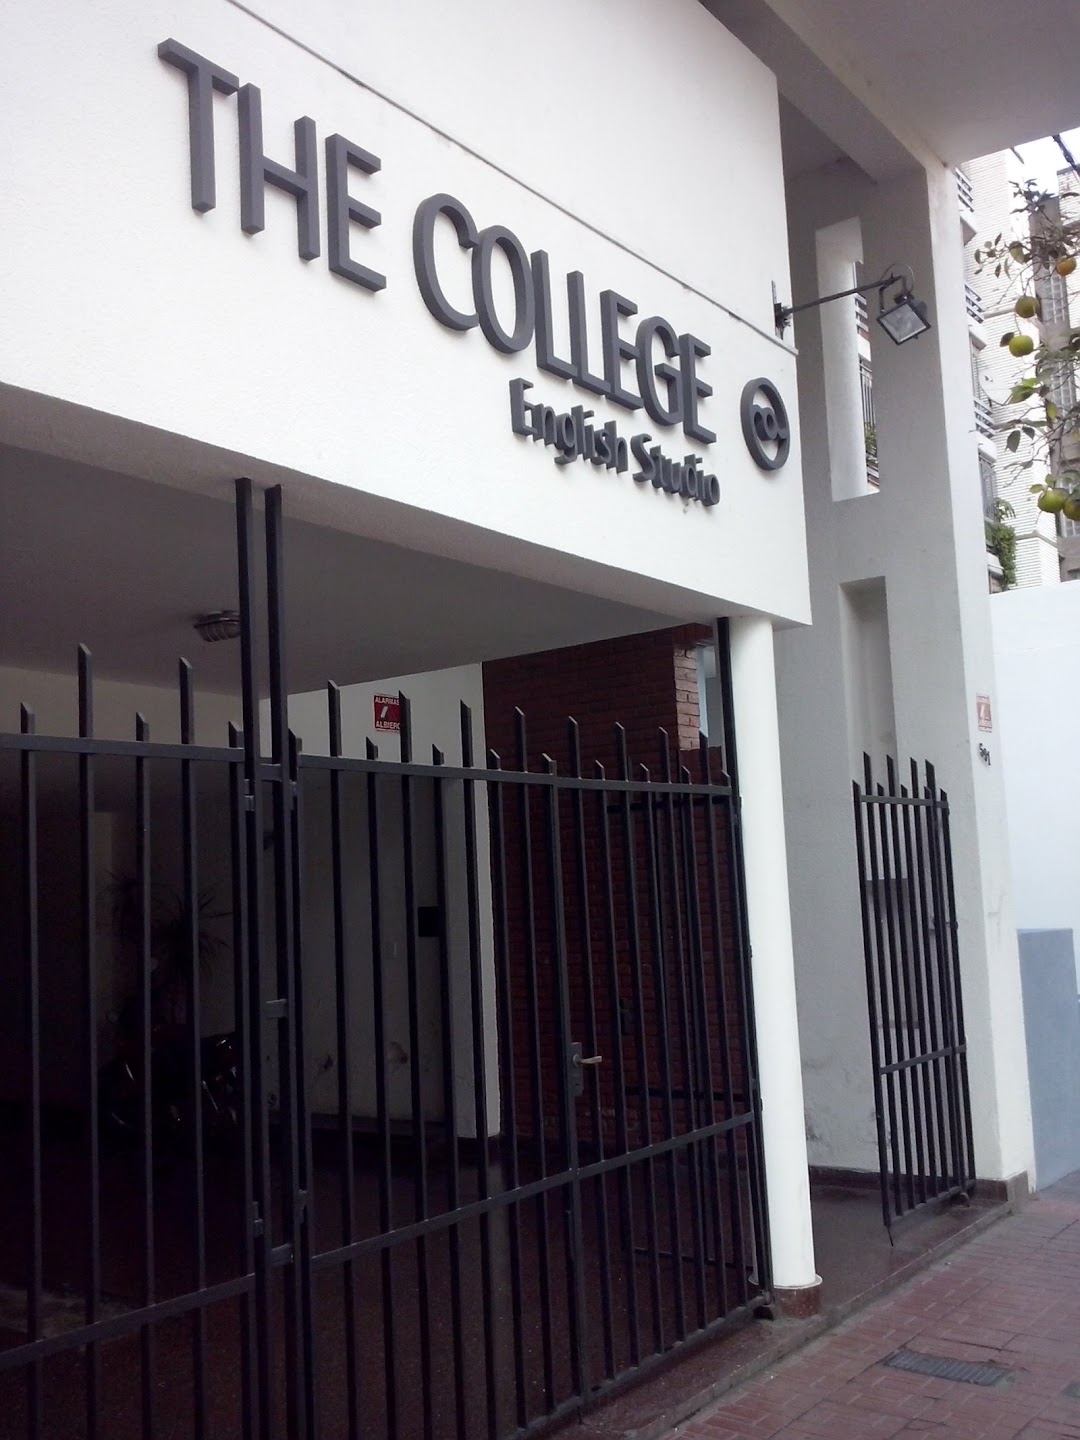 The College English Studio